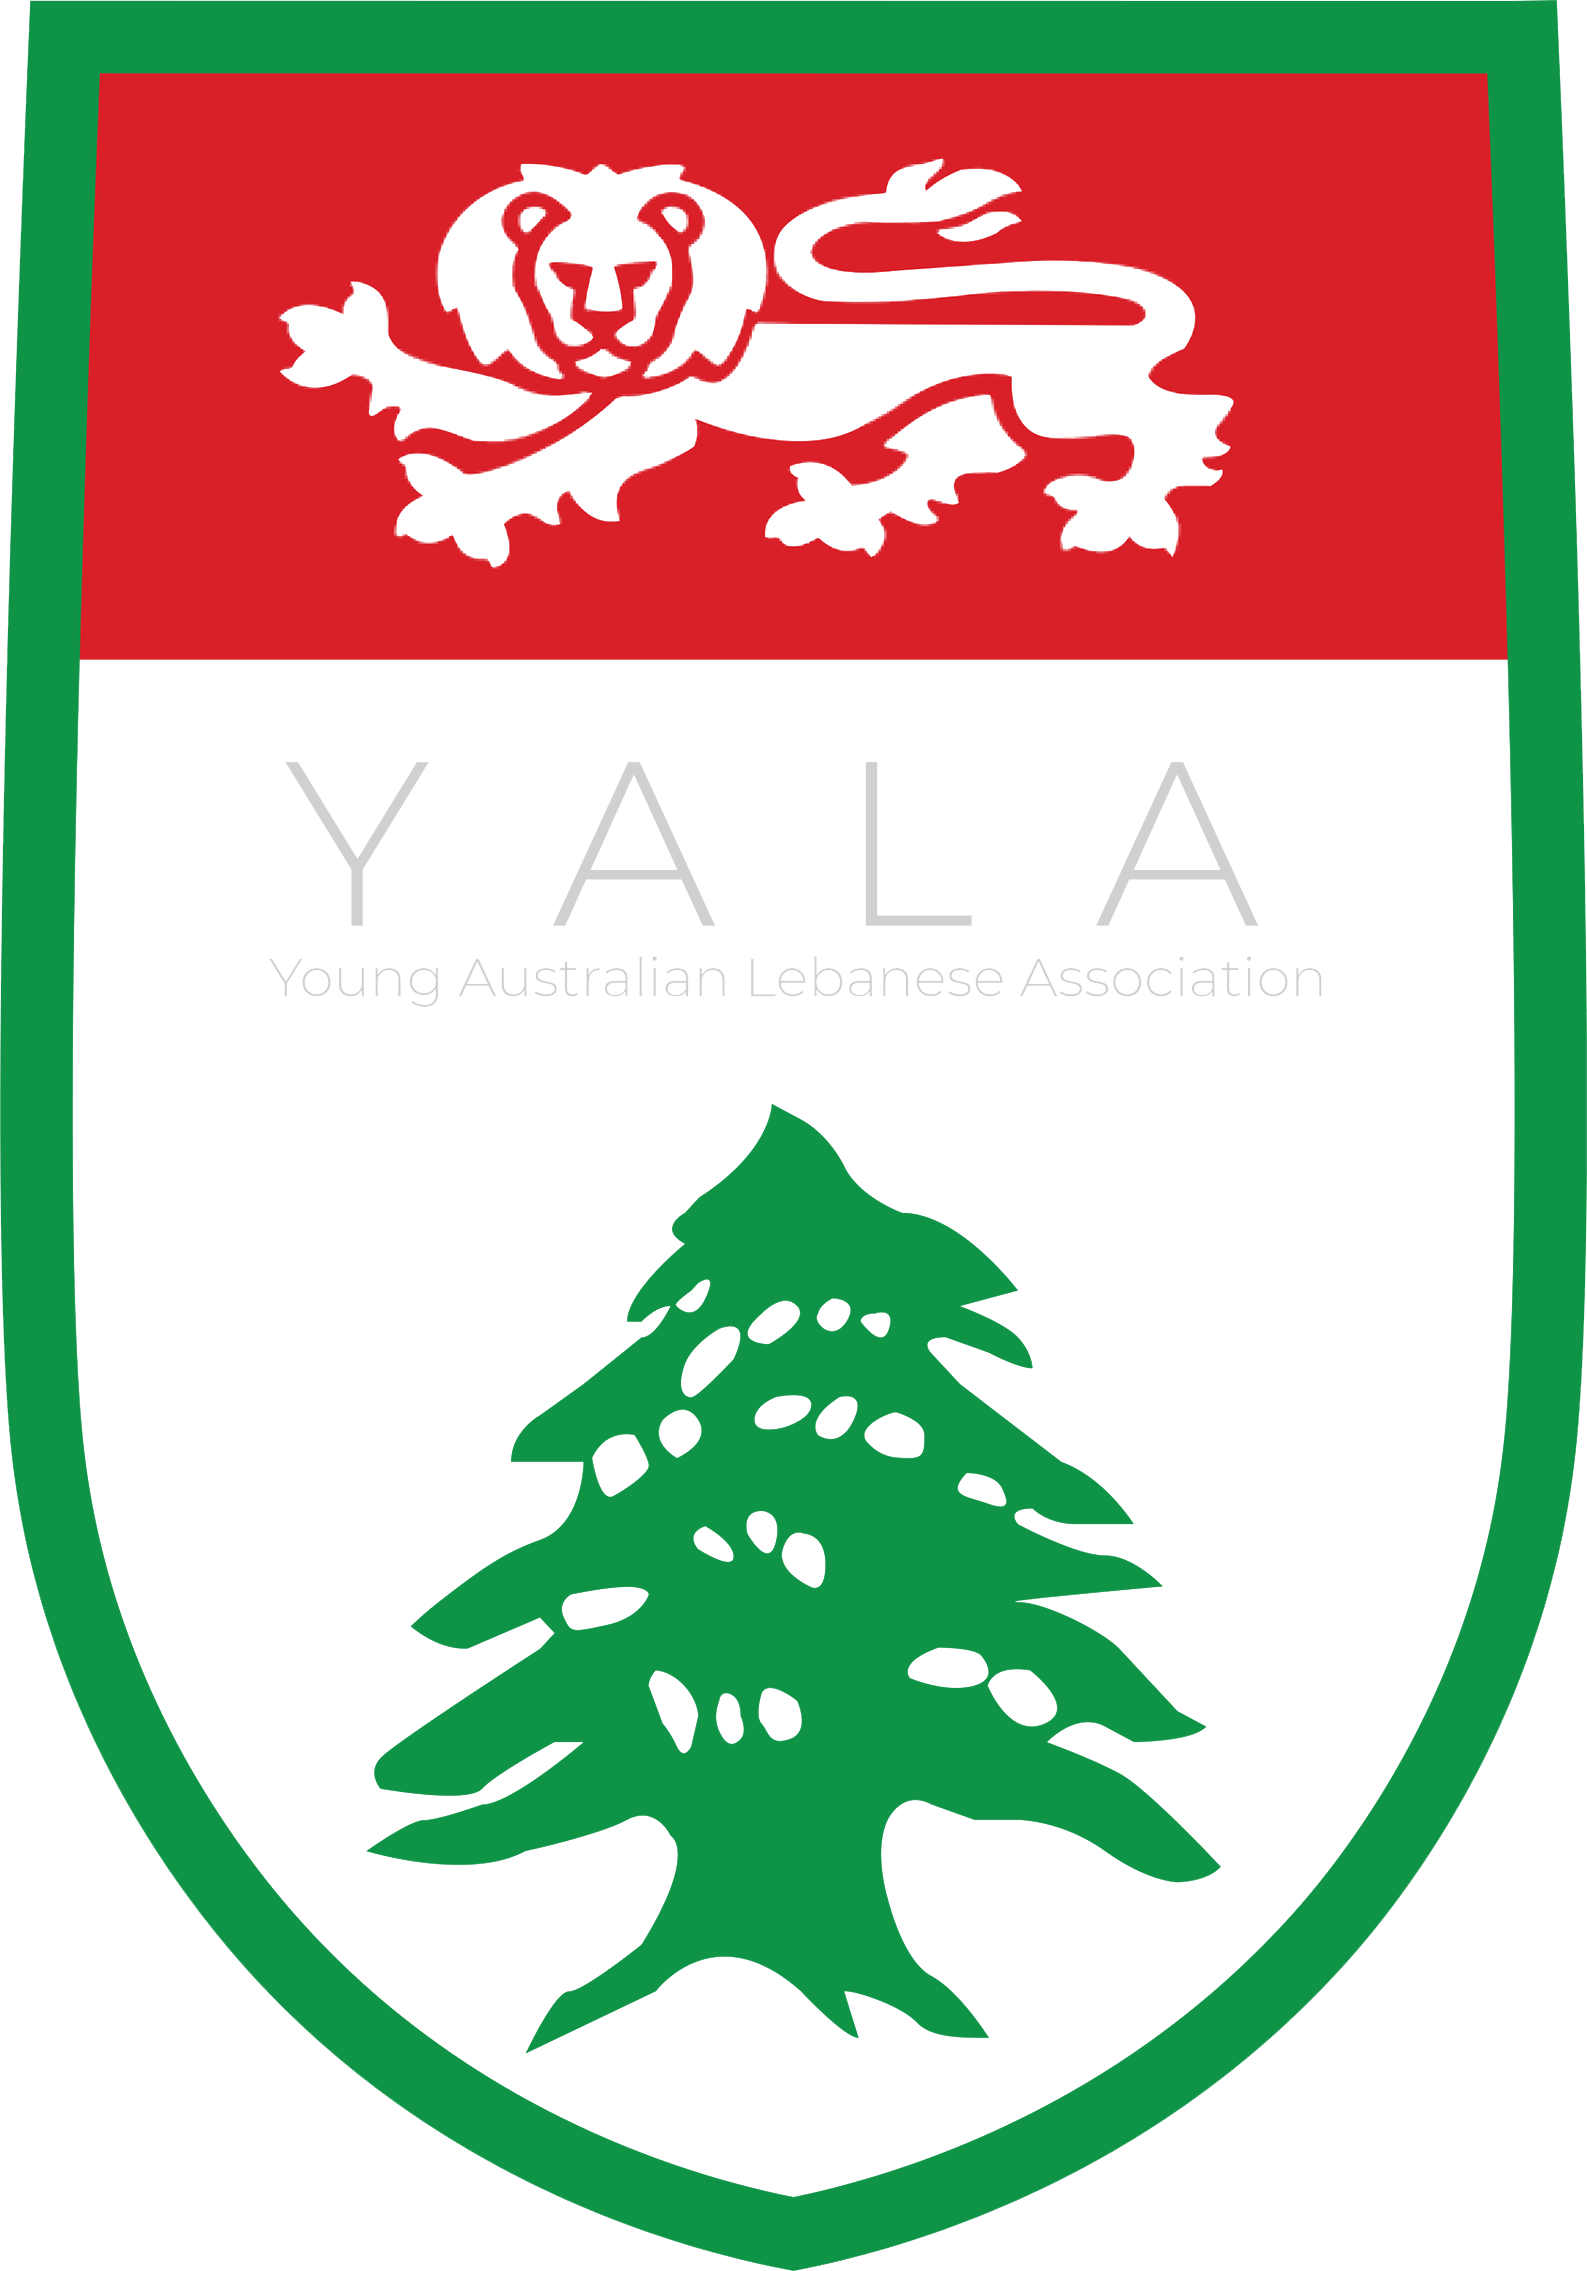 Young Australian Lebanese Association